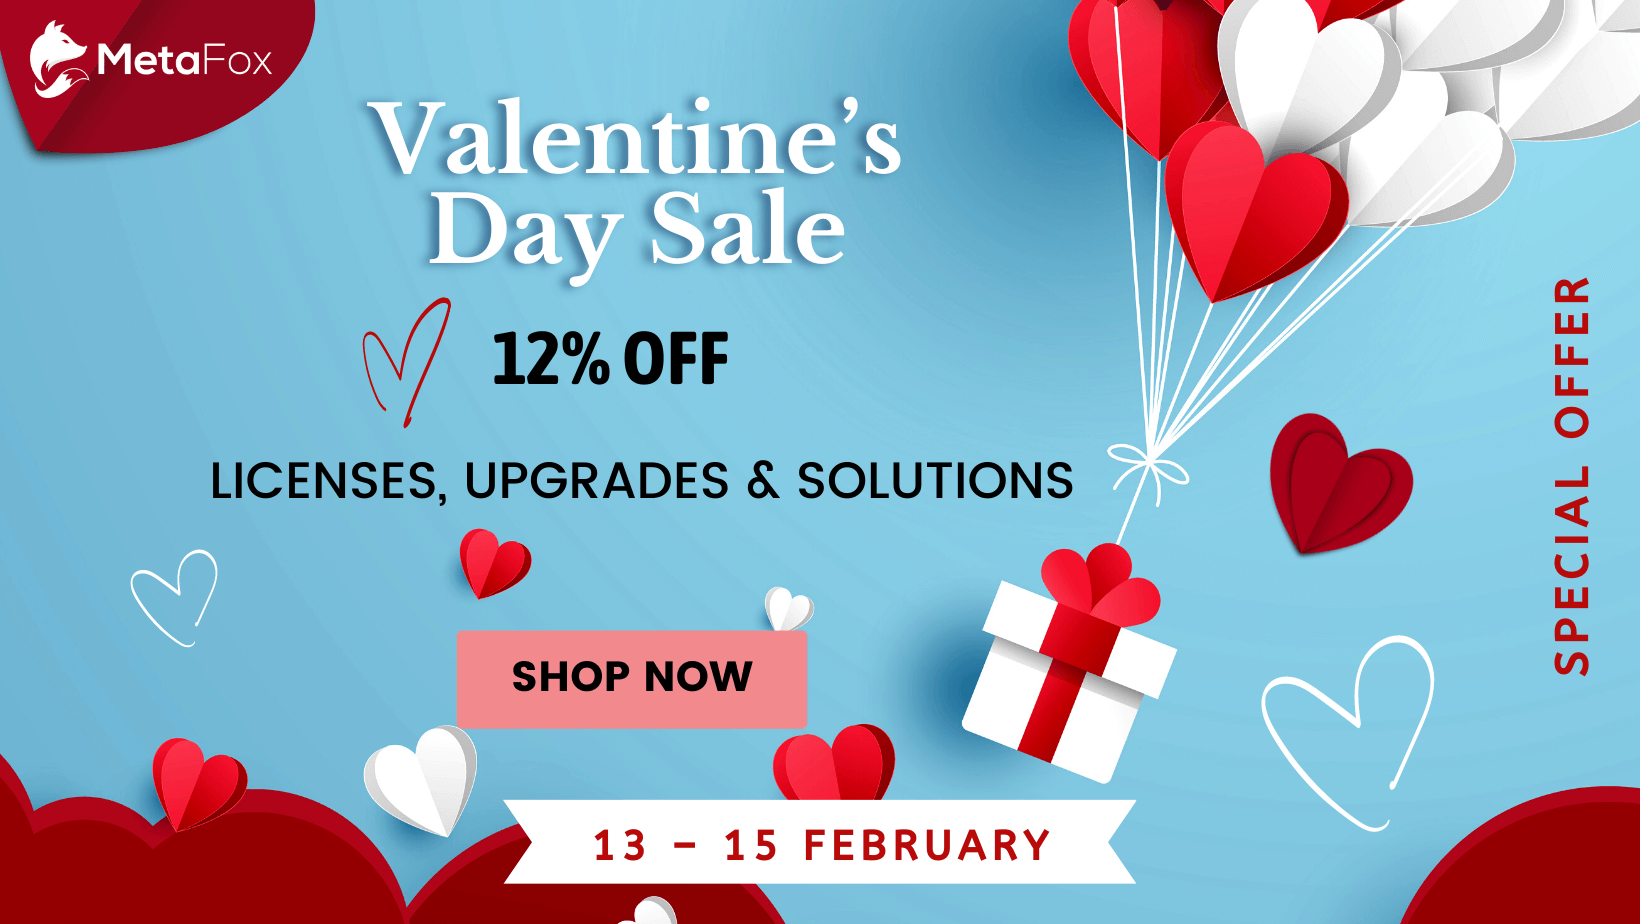 MetaFox Valentine Day Sale